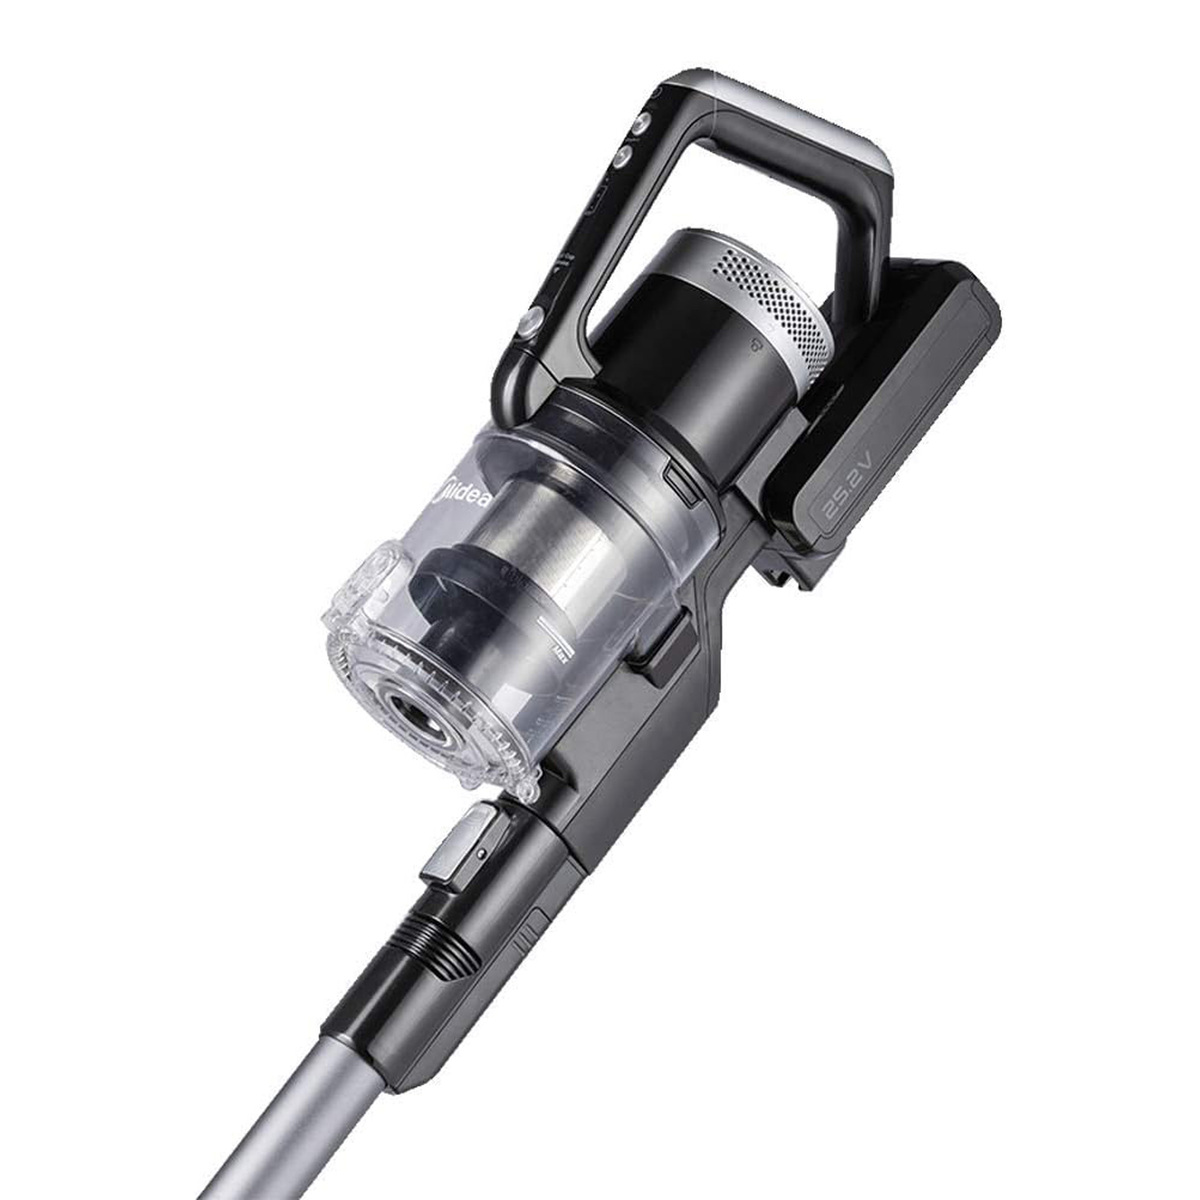 Midea 25.2 V Stick 2 in 1 Cordless Vacuum Cleaner, 350 W, 0.3 L, Black, P20SA